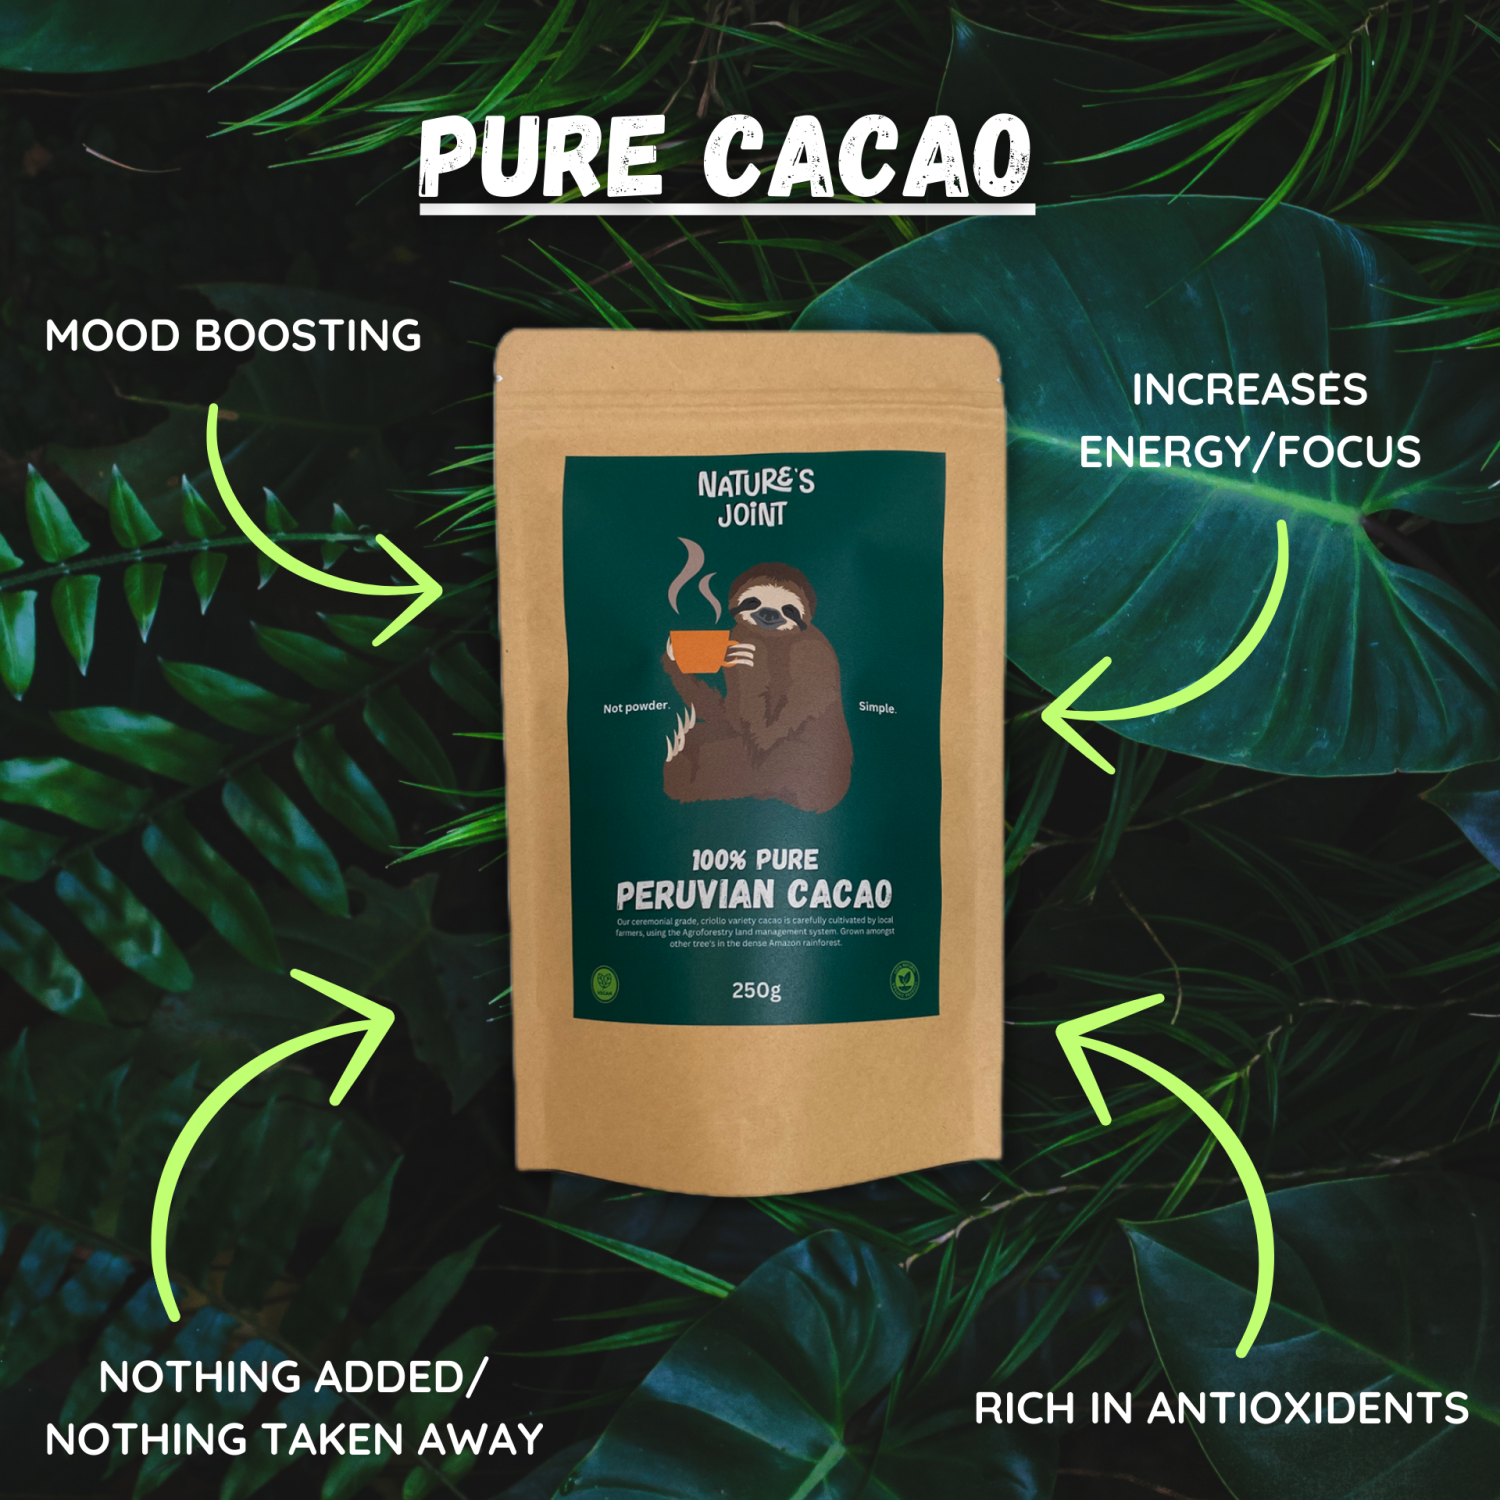 Benefits of Peruvian Cacao